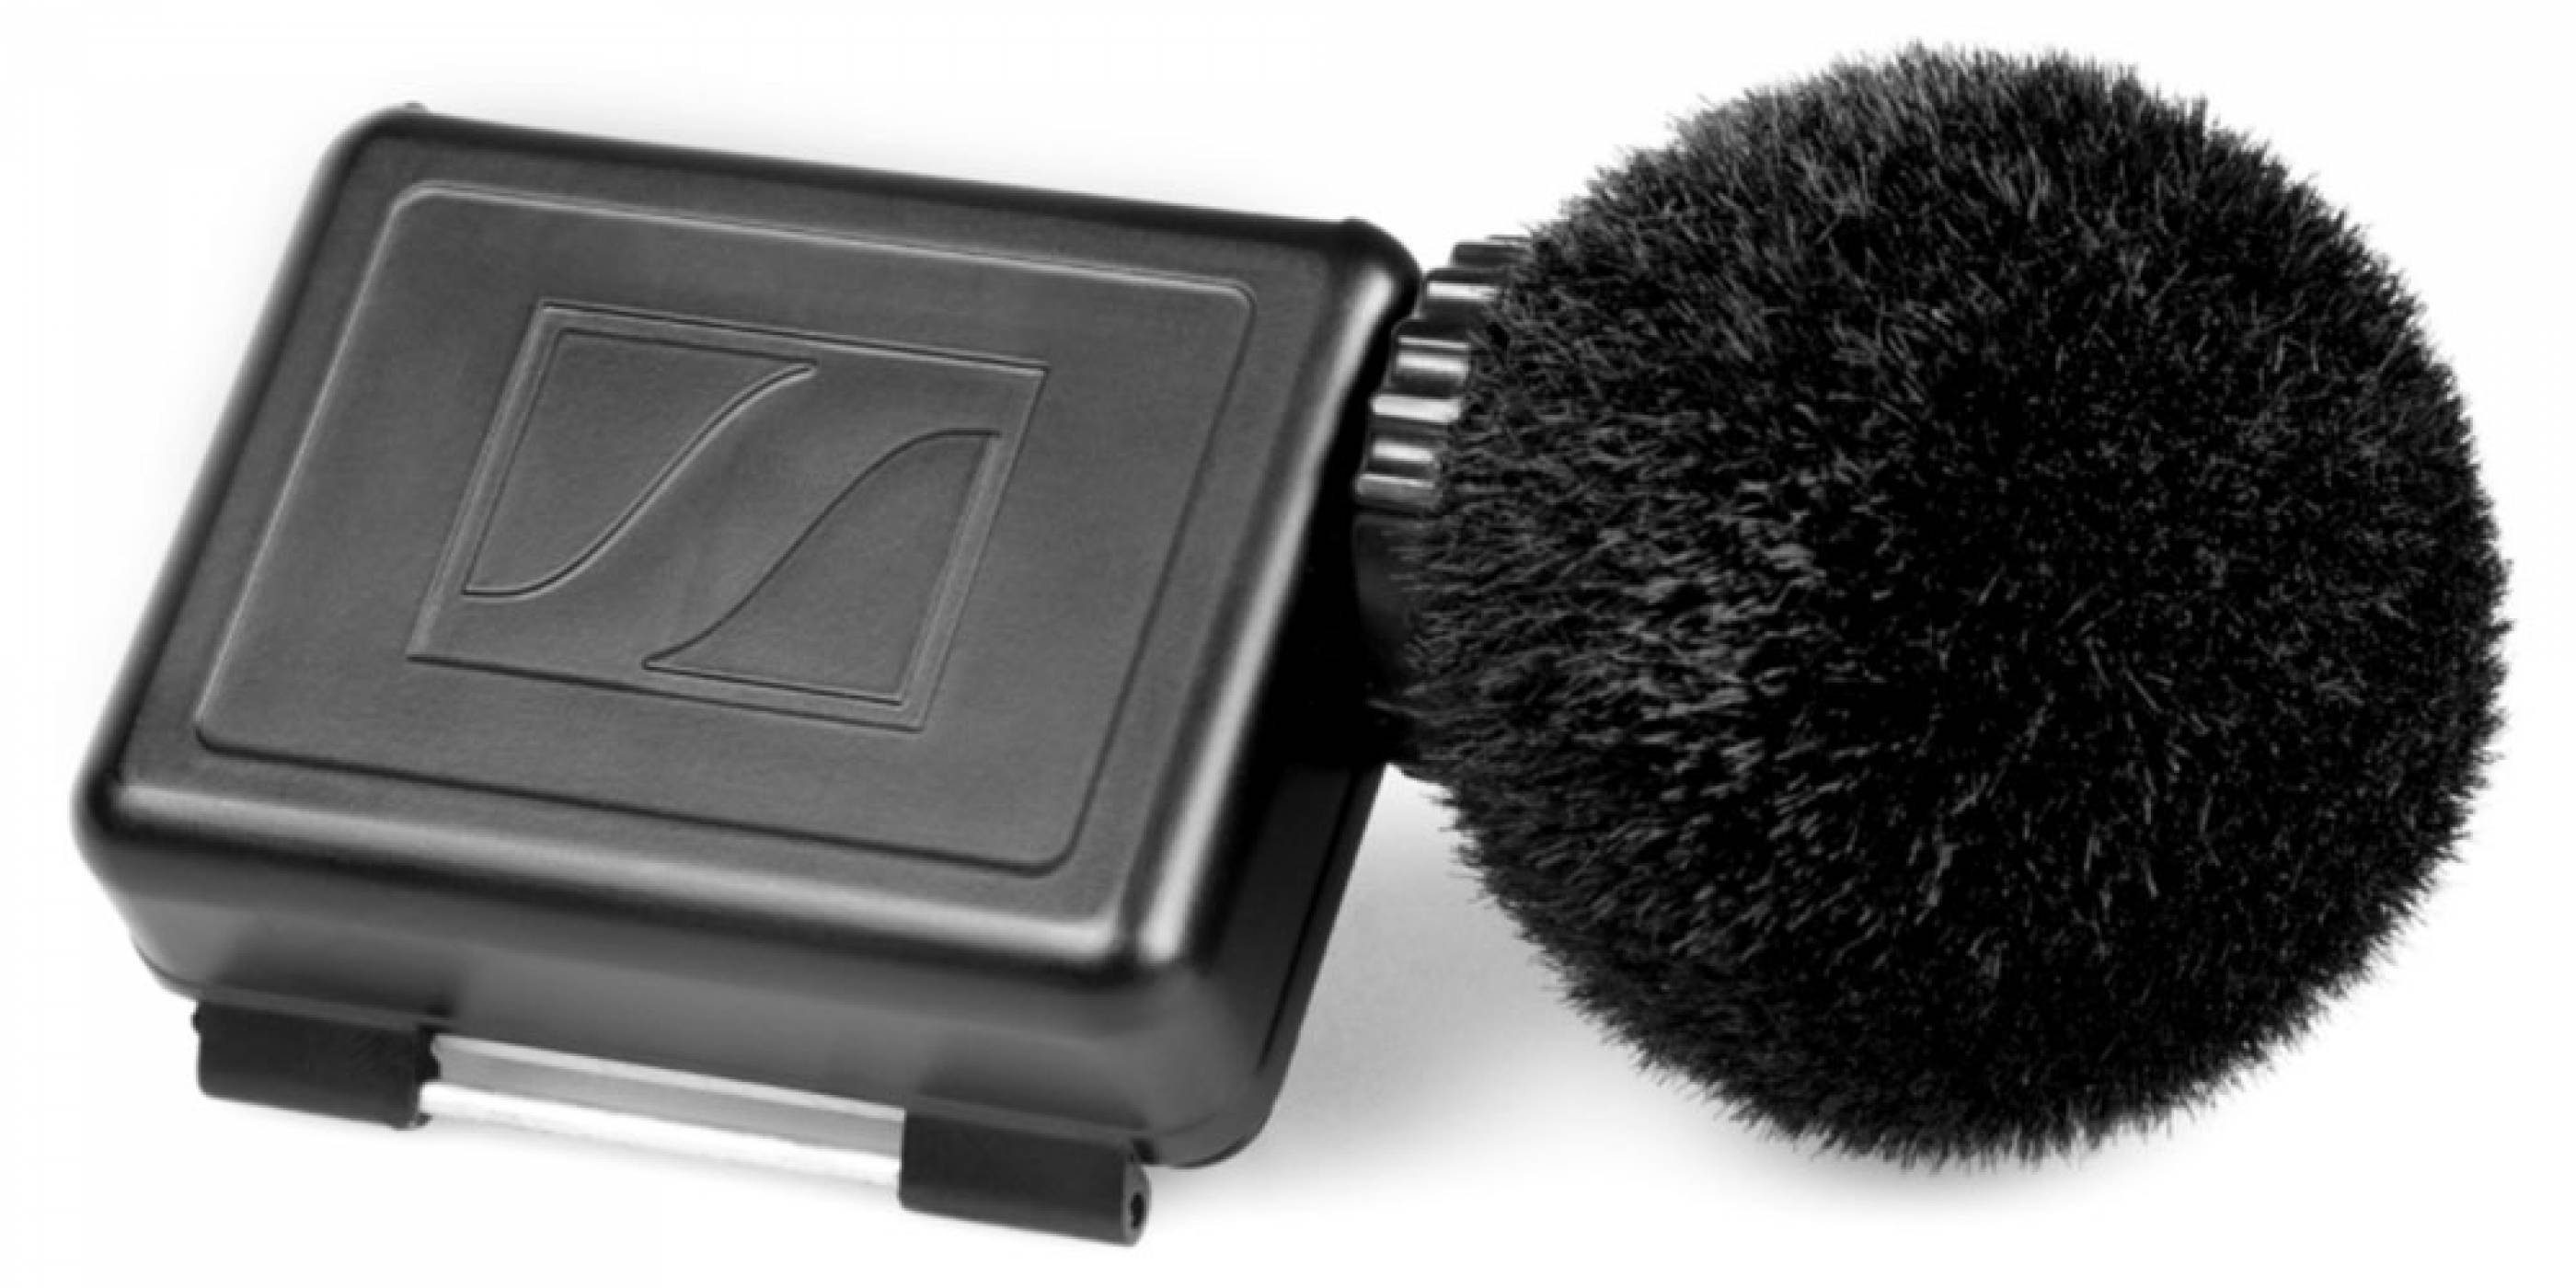 Sennheiser MKE 2 е водоустойчив микрофон за вашата GoPro Hero 4 камера